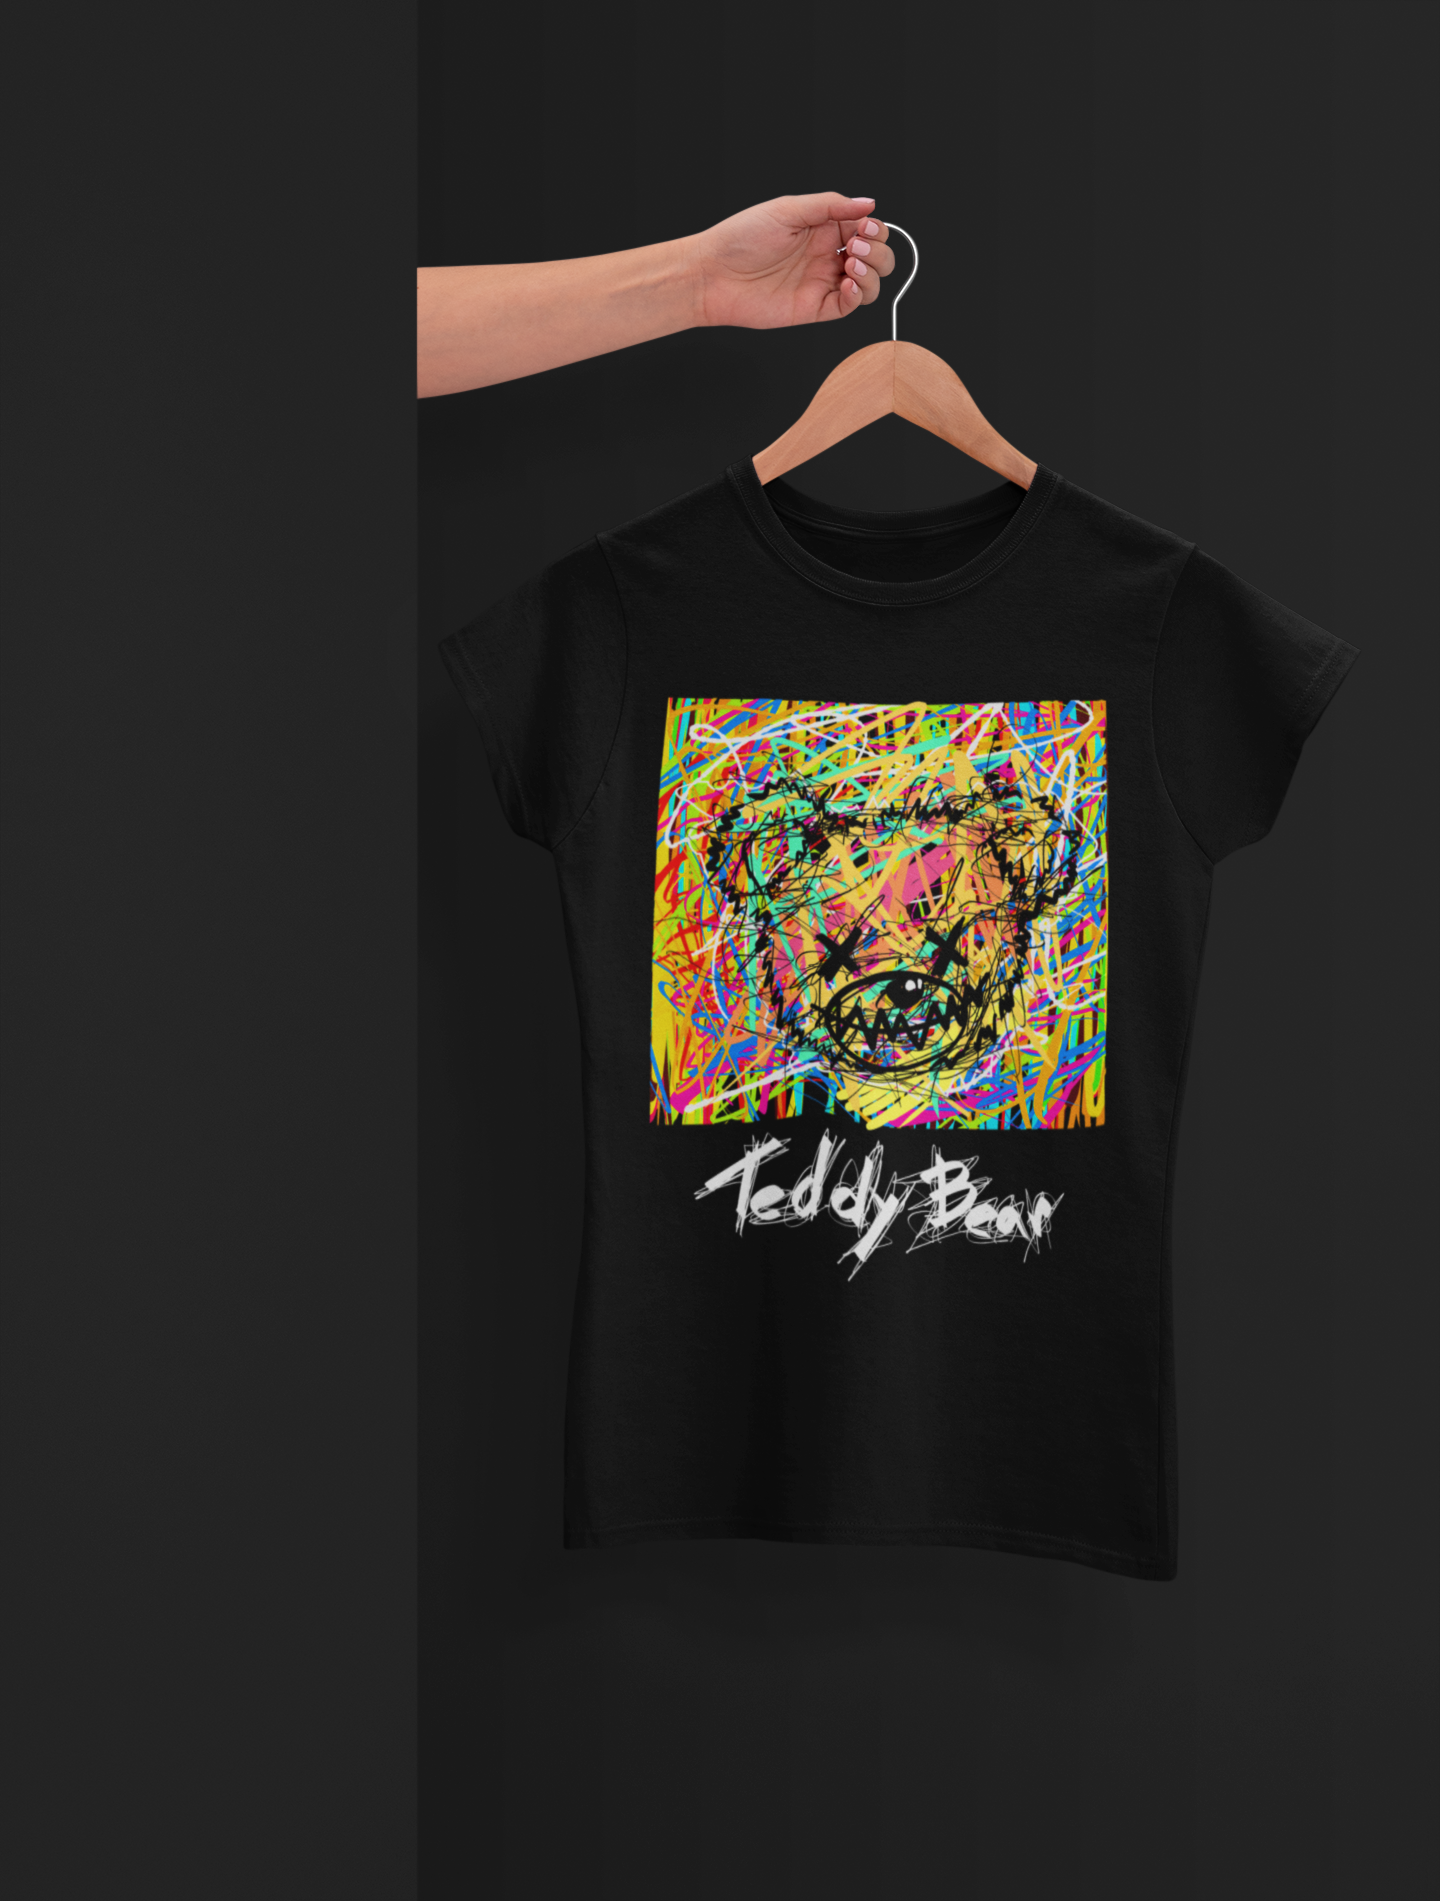 Teddy Bear Black T-Shirt For Women